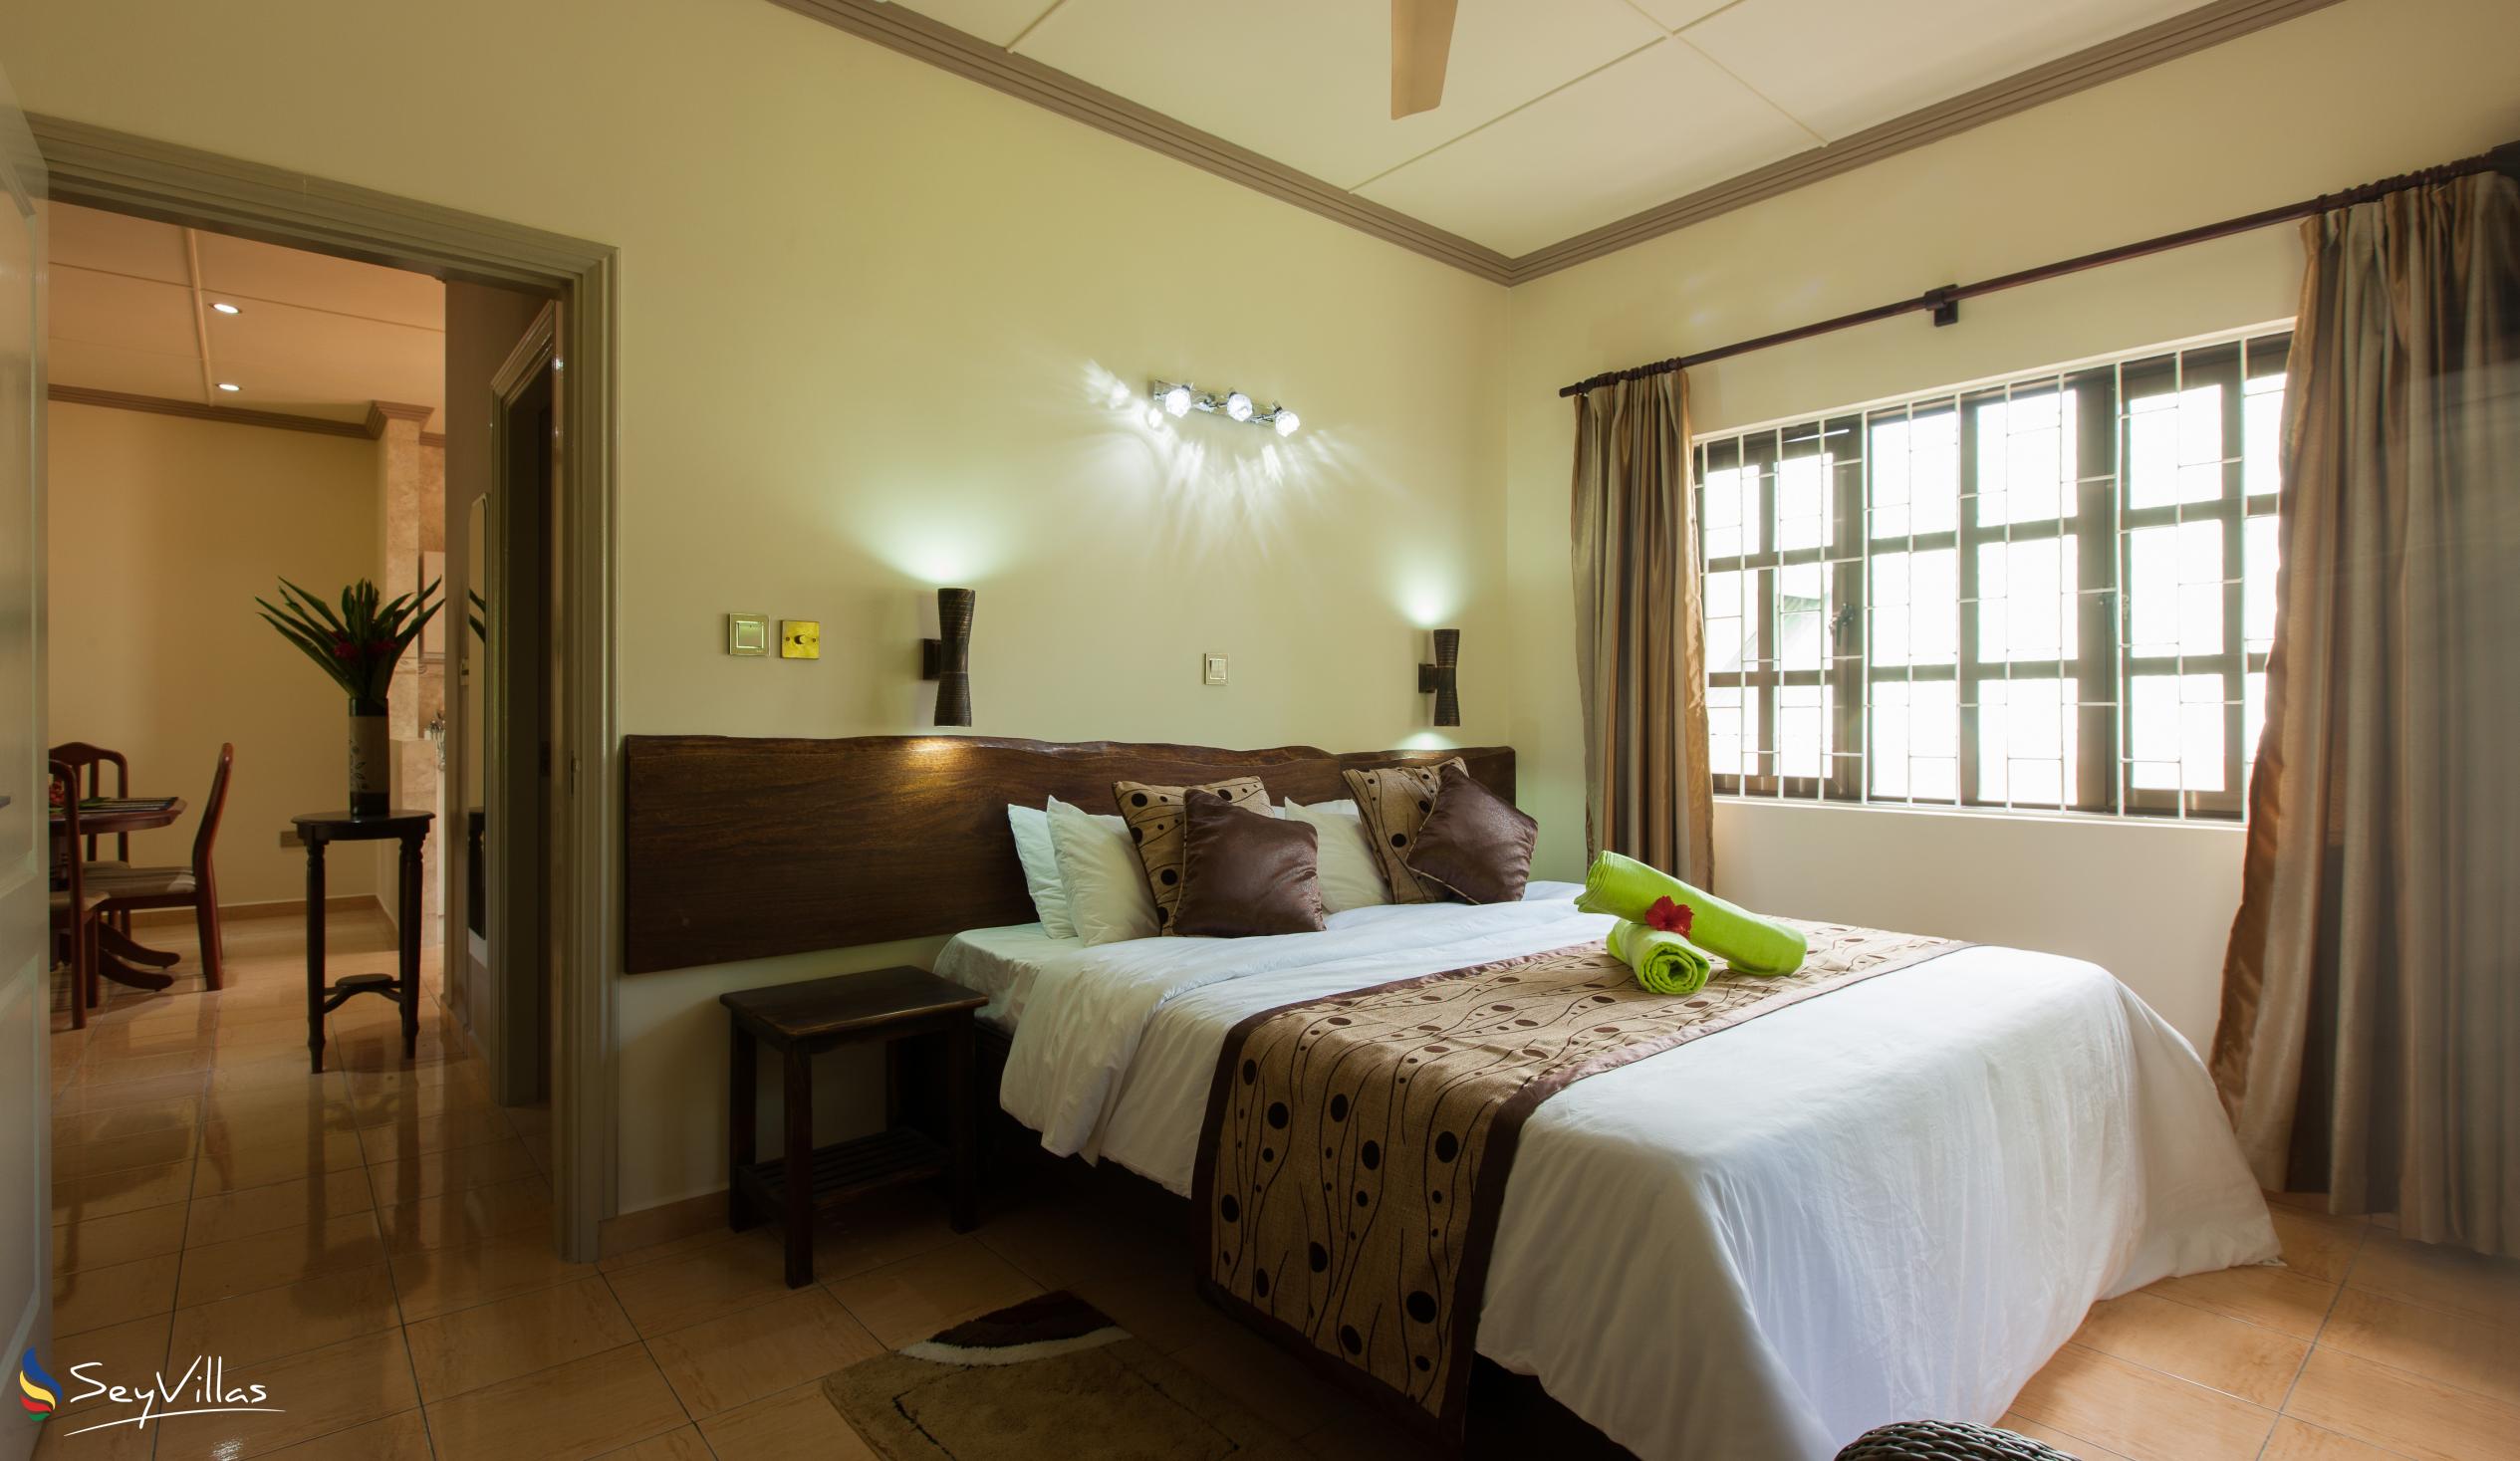 Foto 114: Chez Bea Villa - Appartamento con 1 camera - Praslin (Seychelles)